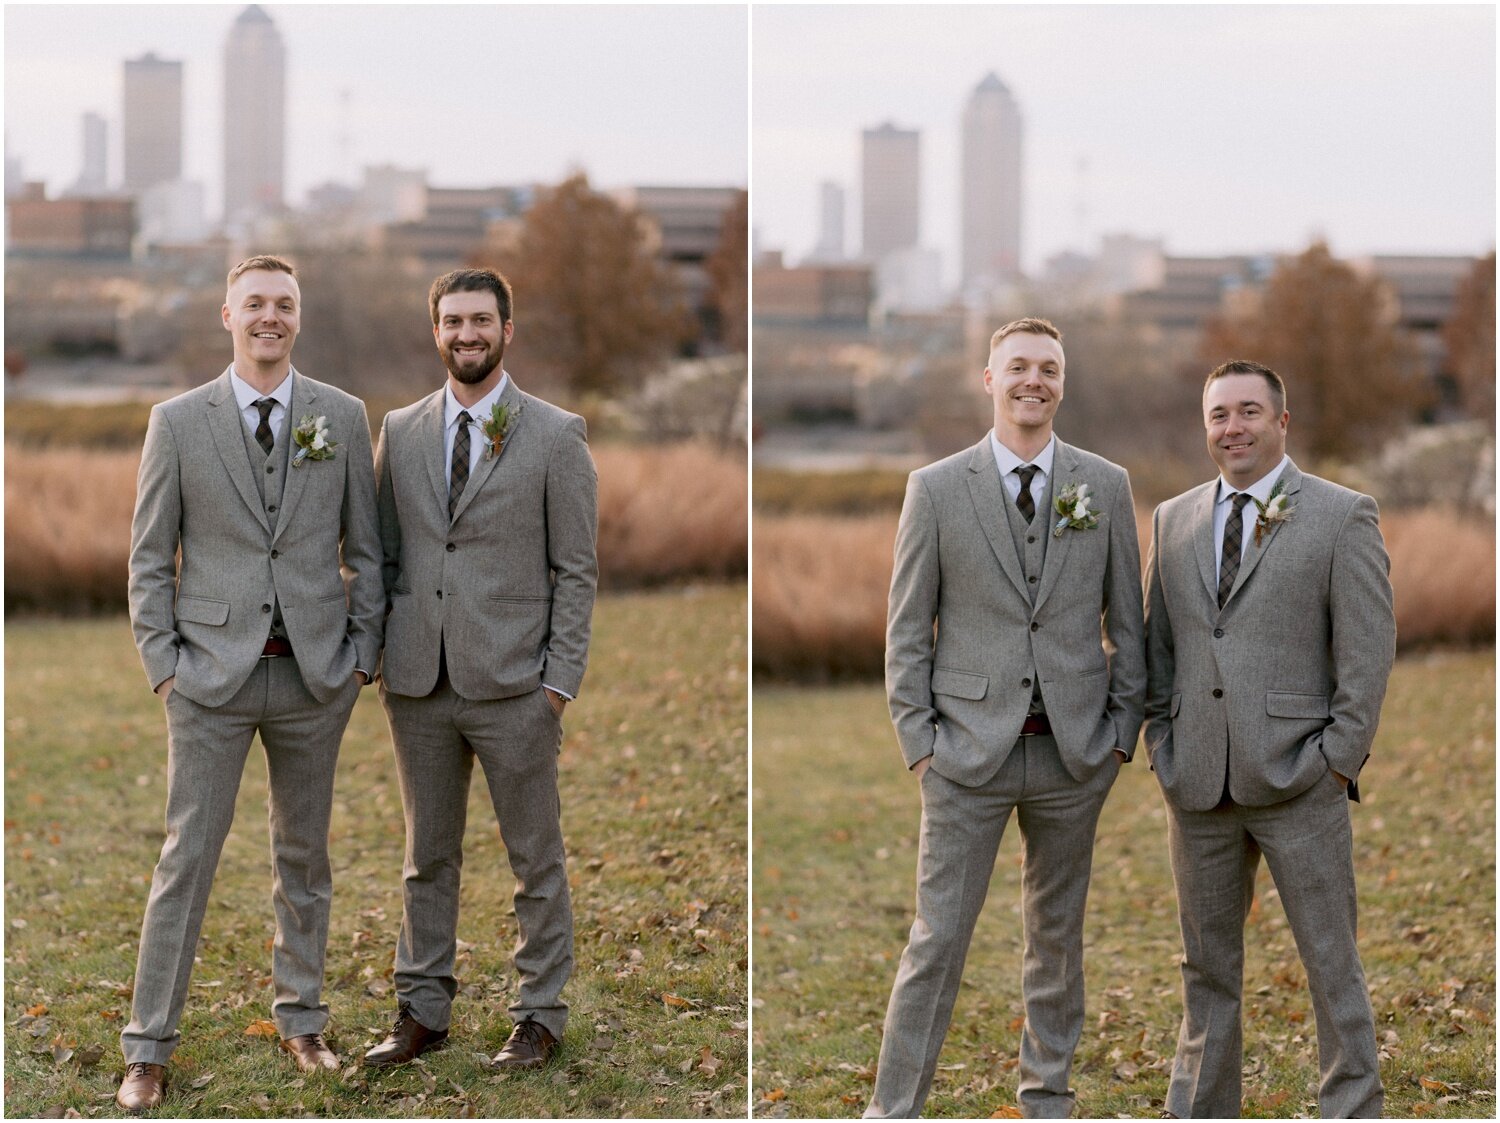 Andrew Ferren Photography - Des Moines Iowa Wedding Photographer - Destination - Engagement - Videography - Videographer - The River Center55.jpg